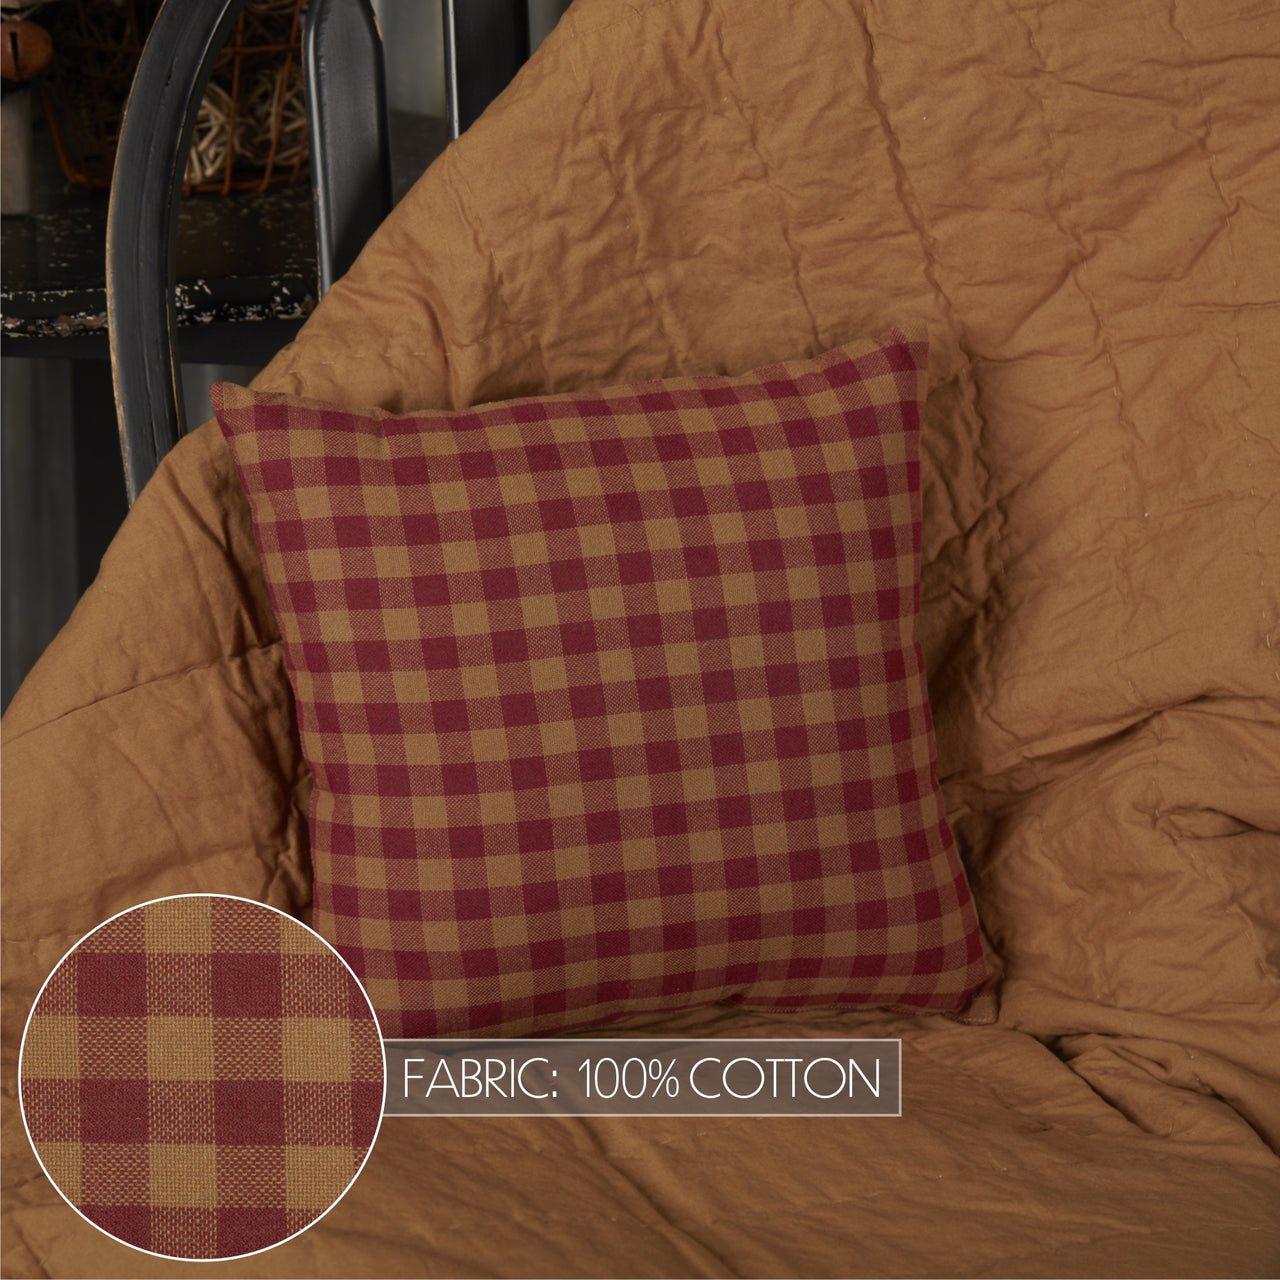 Burgundy Check Fabric Pillow 16"